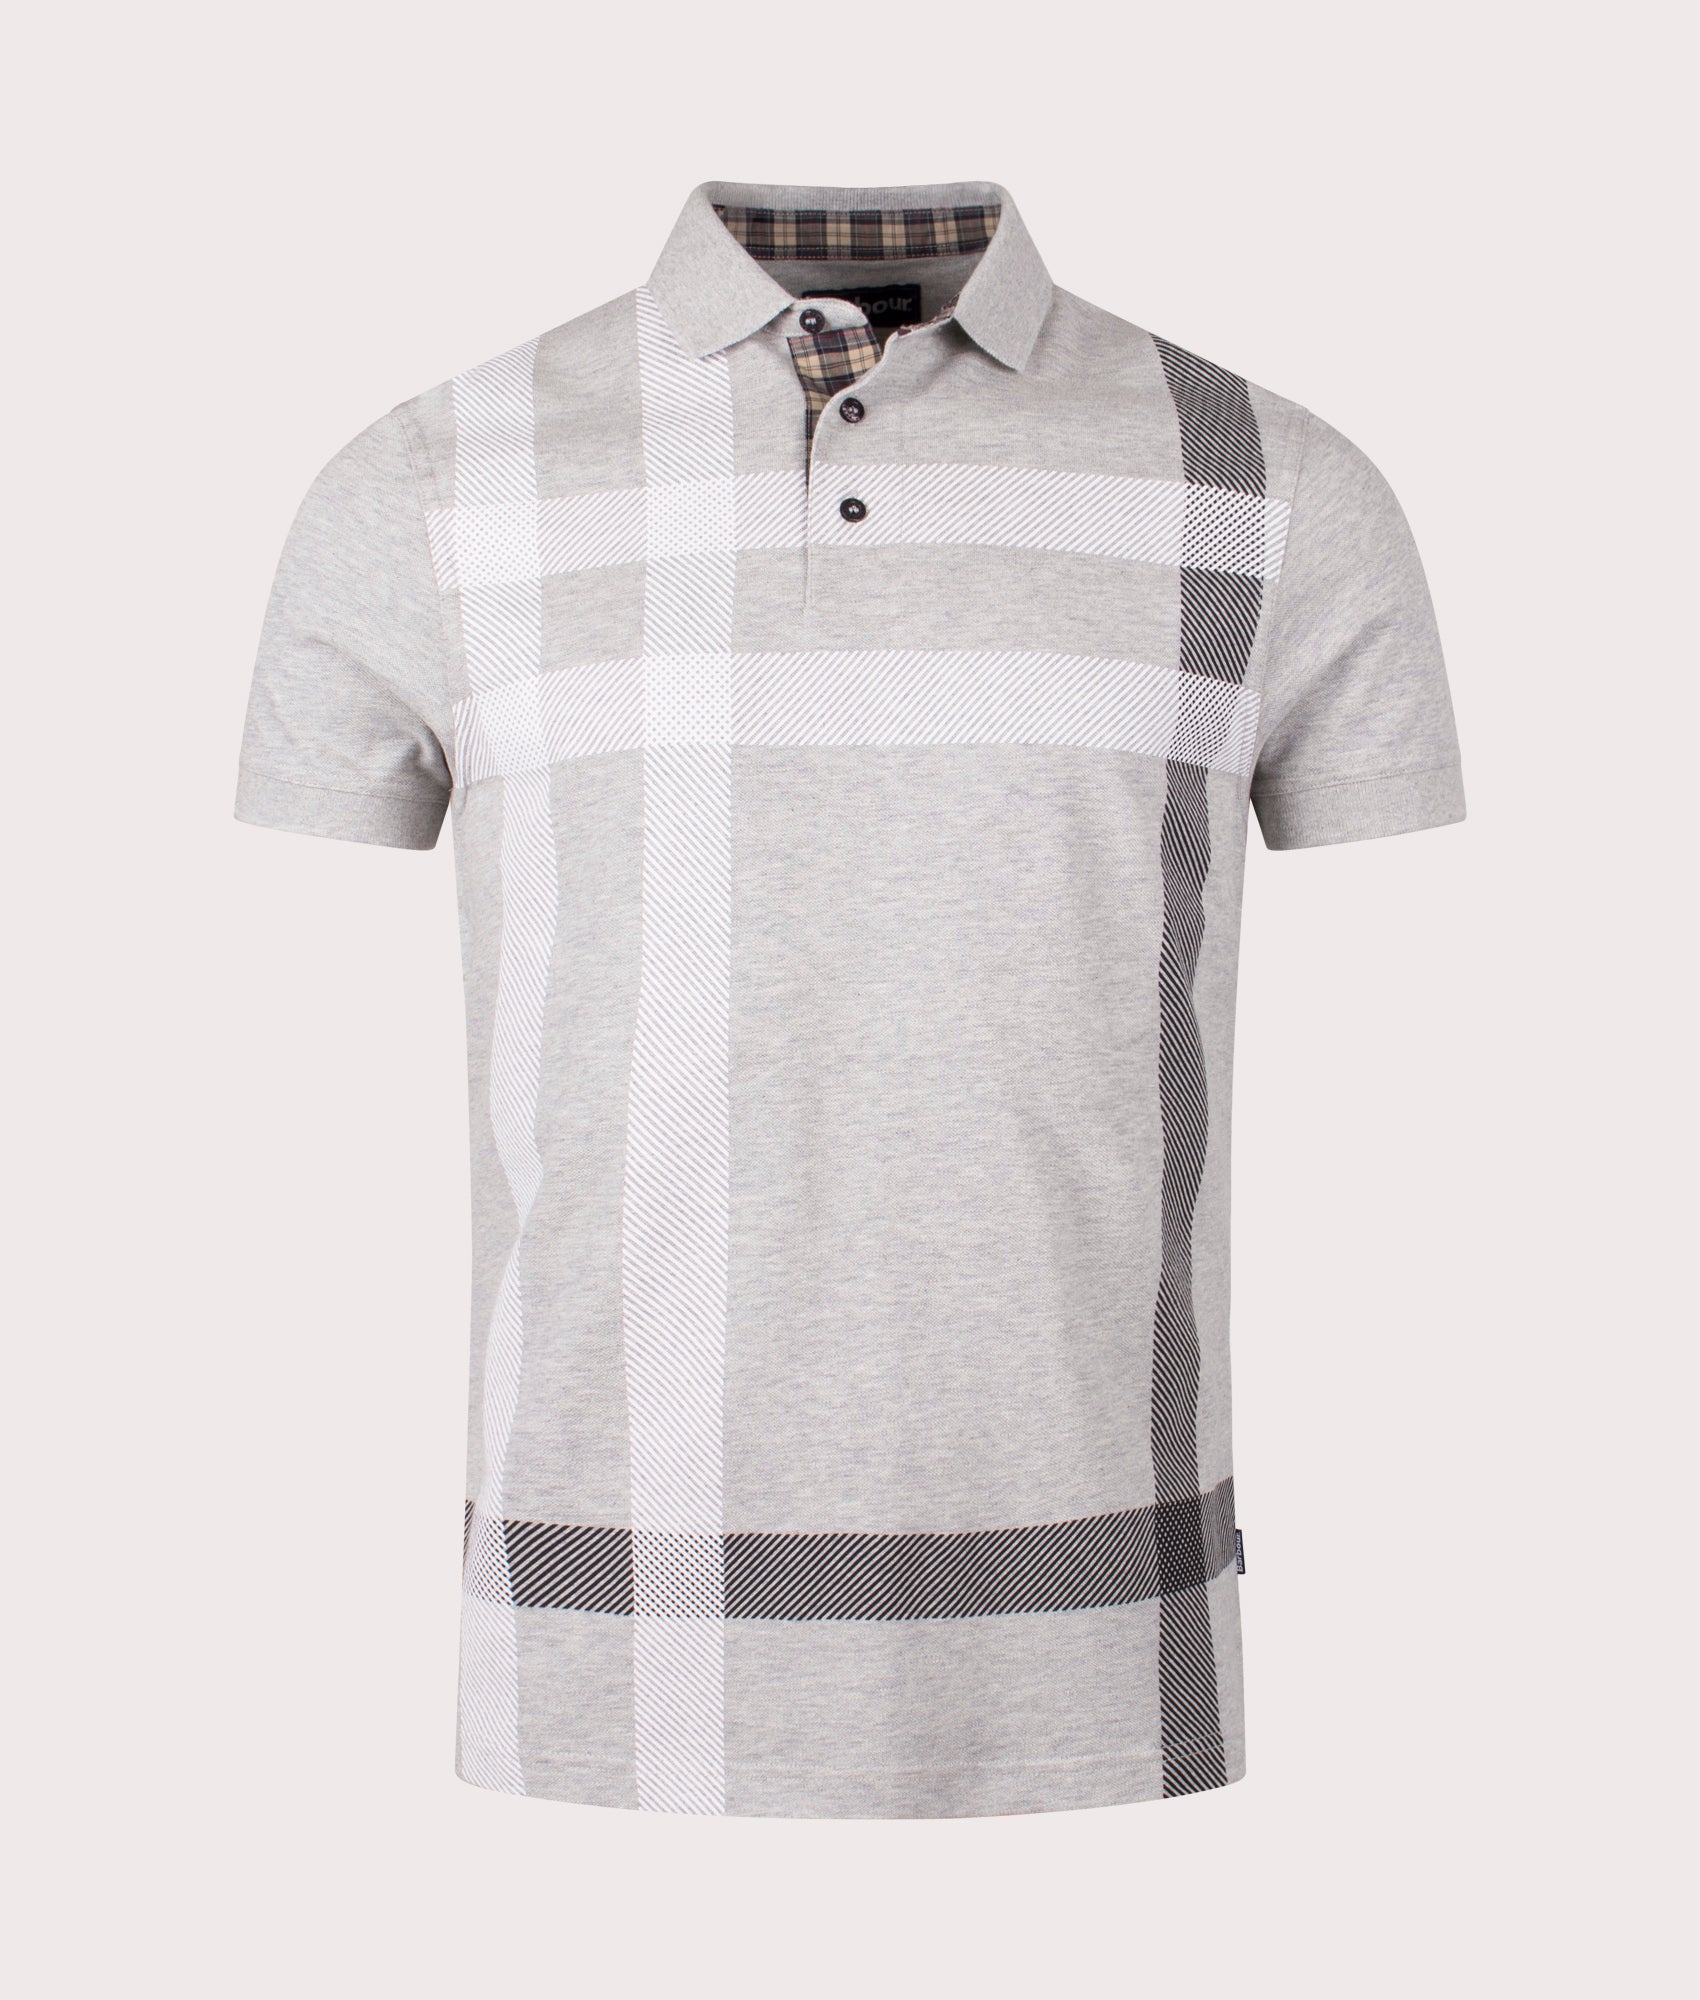 Barbour Lifestyle Mens Blaine Polo Shirt - Colour: GY52 Grey Marl - Size: Medium